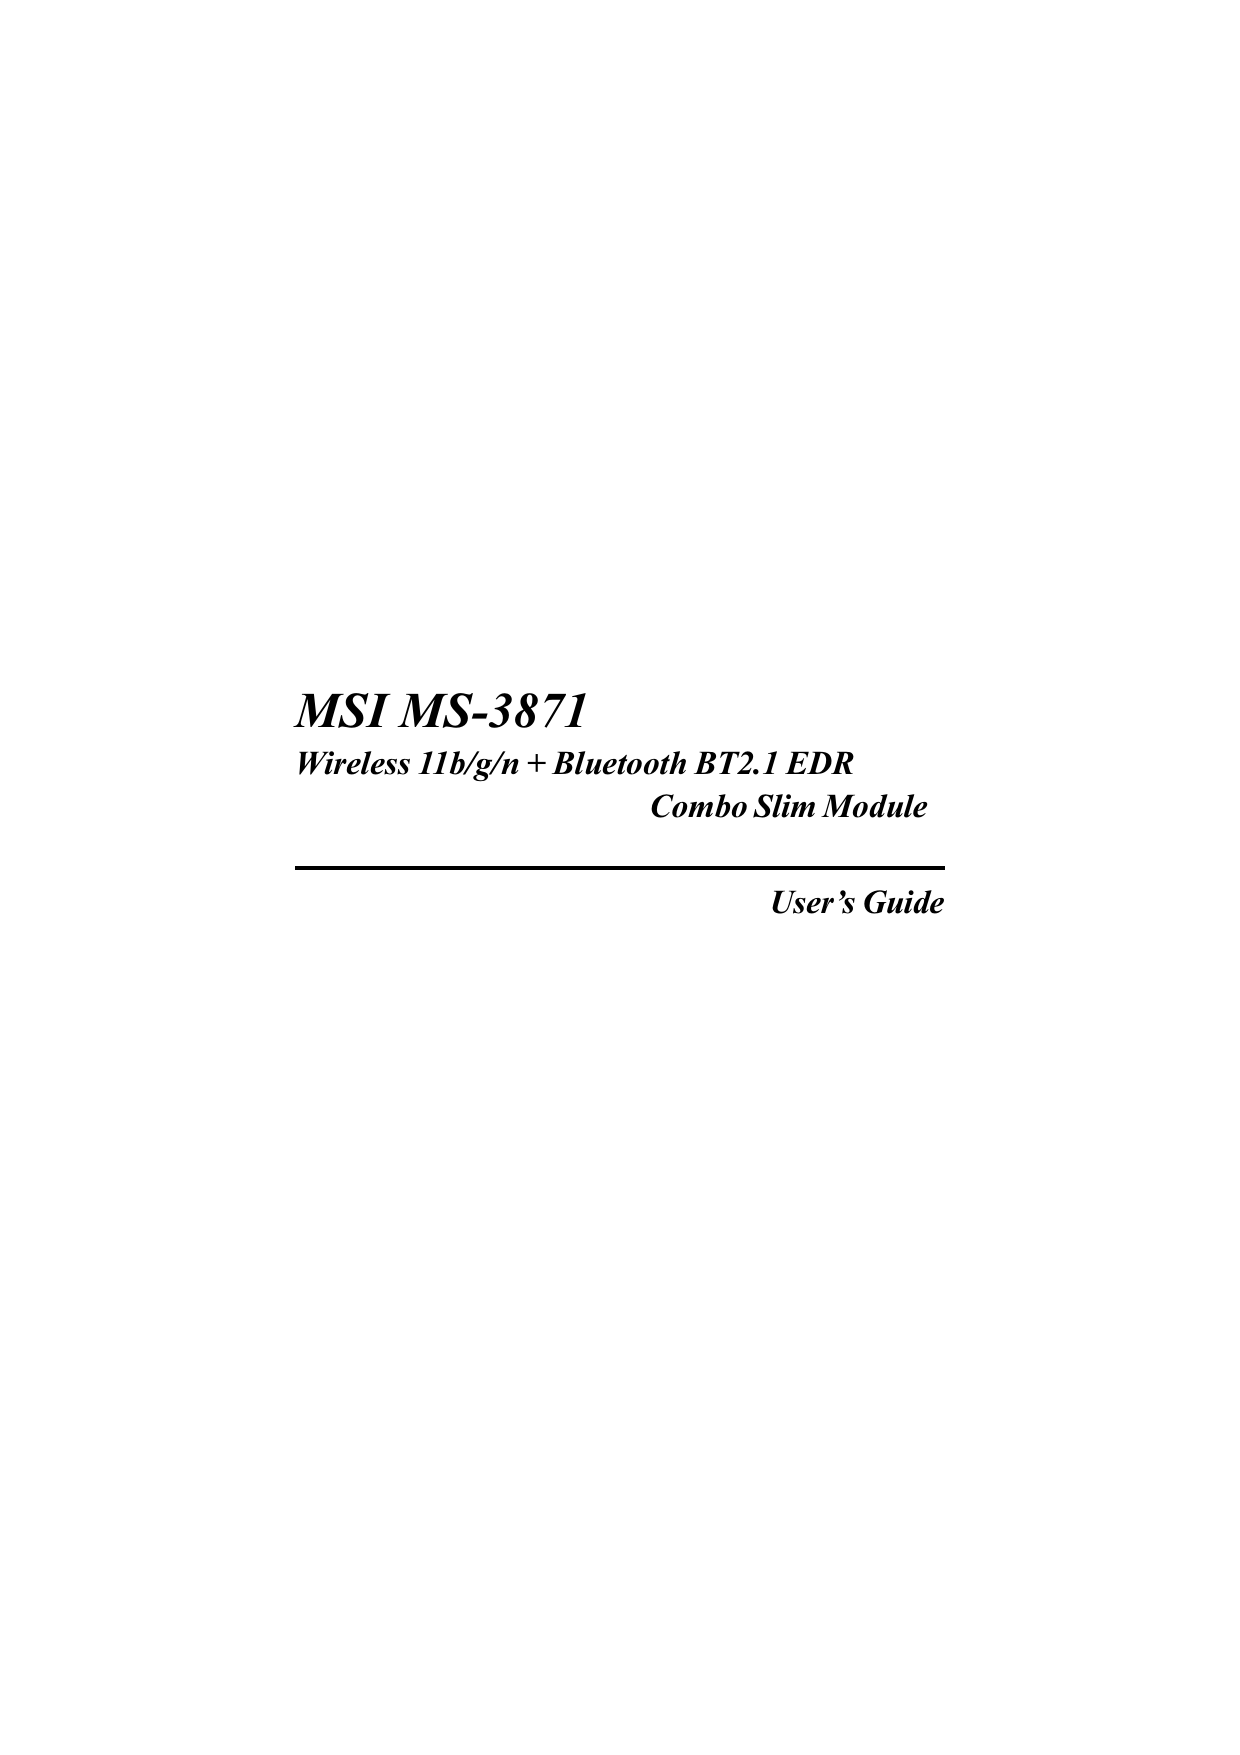 iMSI MS-3871Wireless 11b/g/n + Bluetooth BT2.1 EDRCombo Slim ModuleUser’sGuide